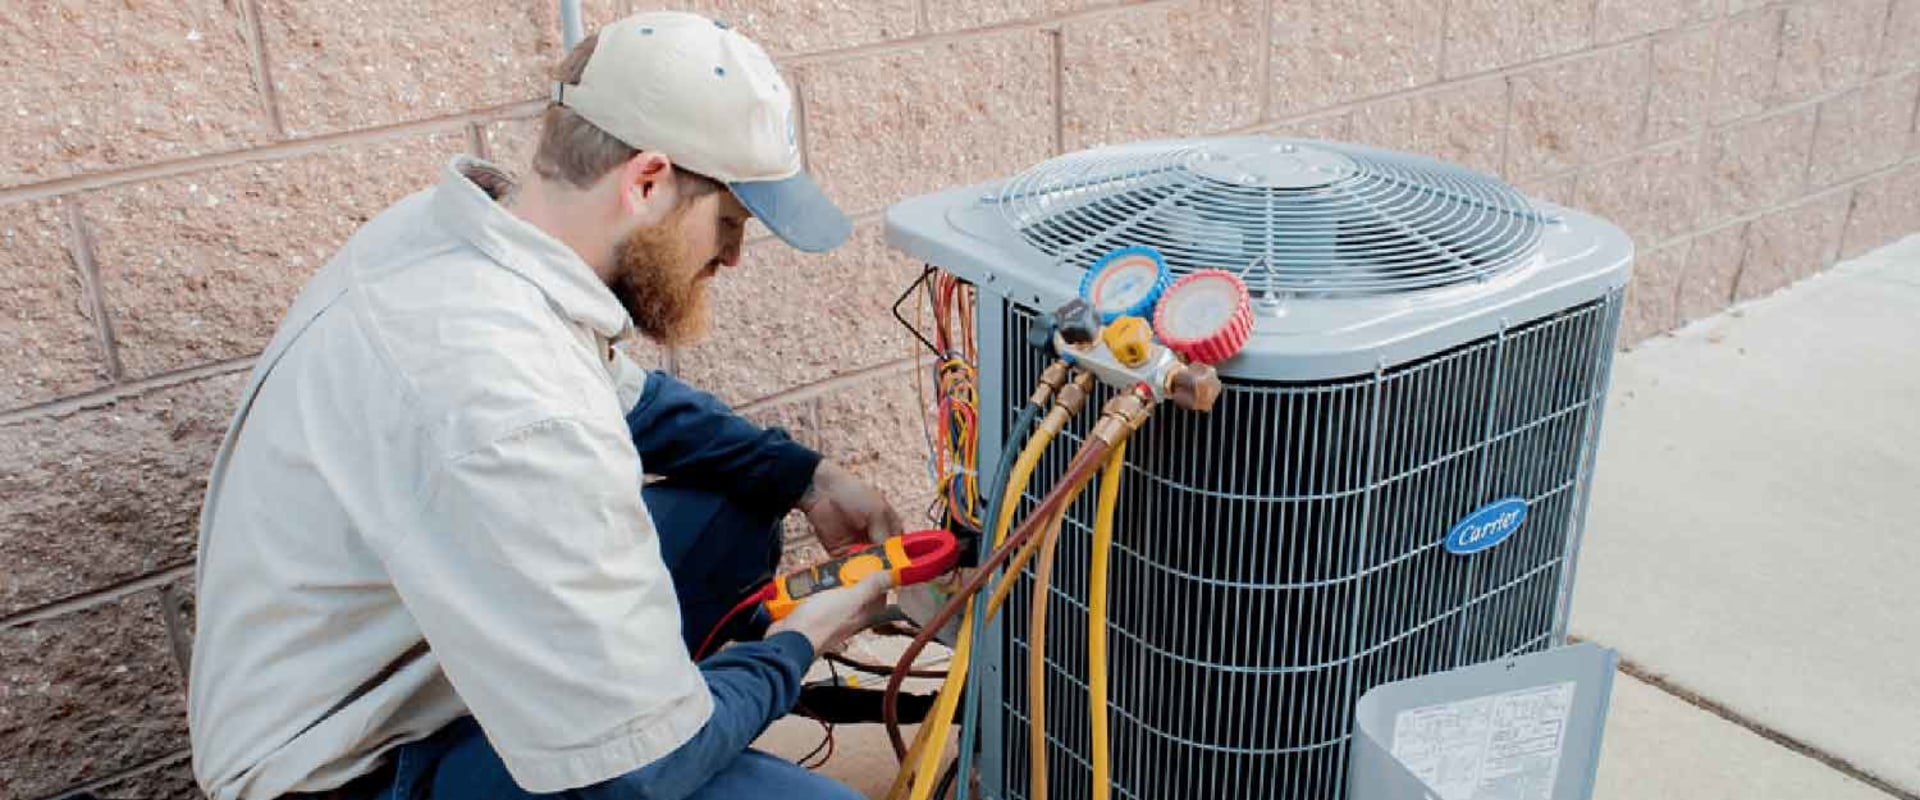 Hiring a Reliable Professional HVAC Repair Service